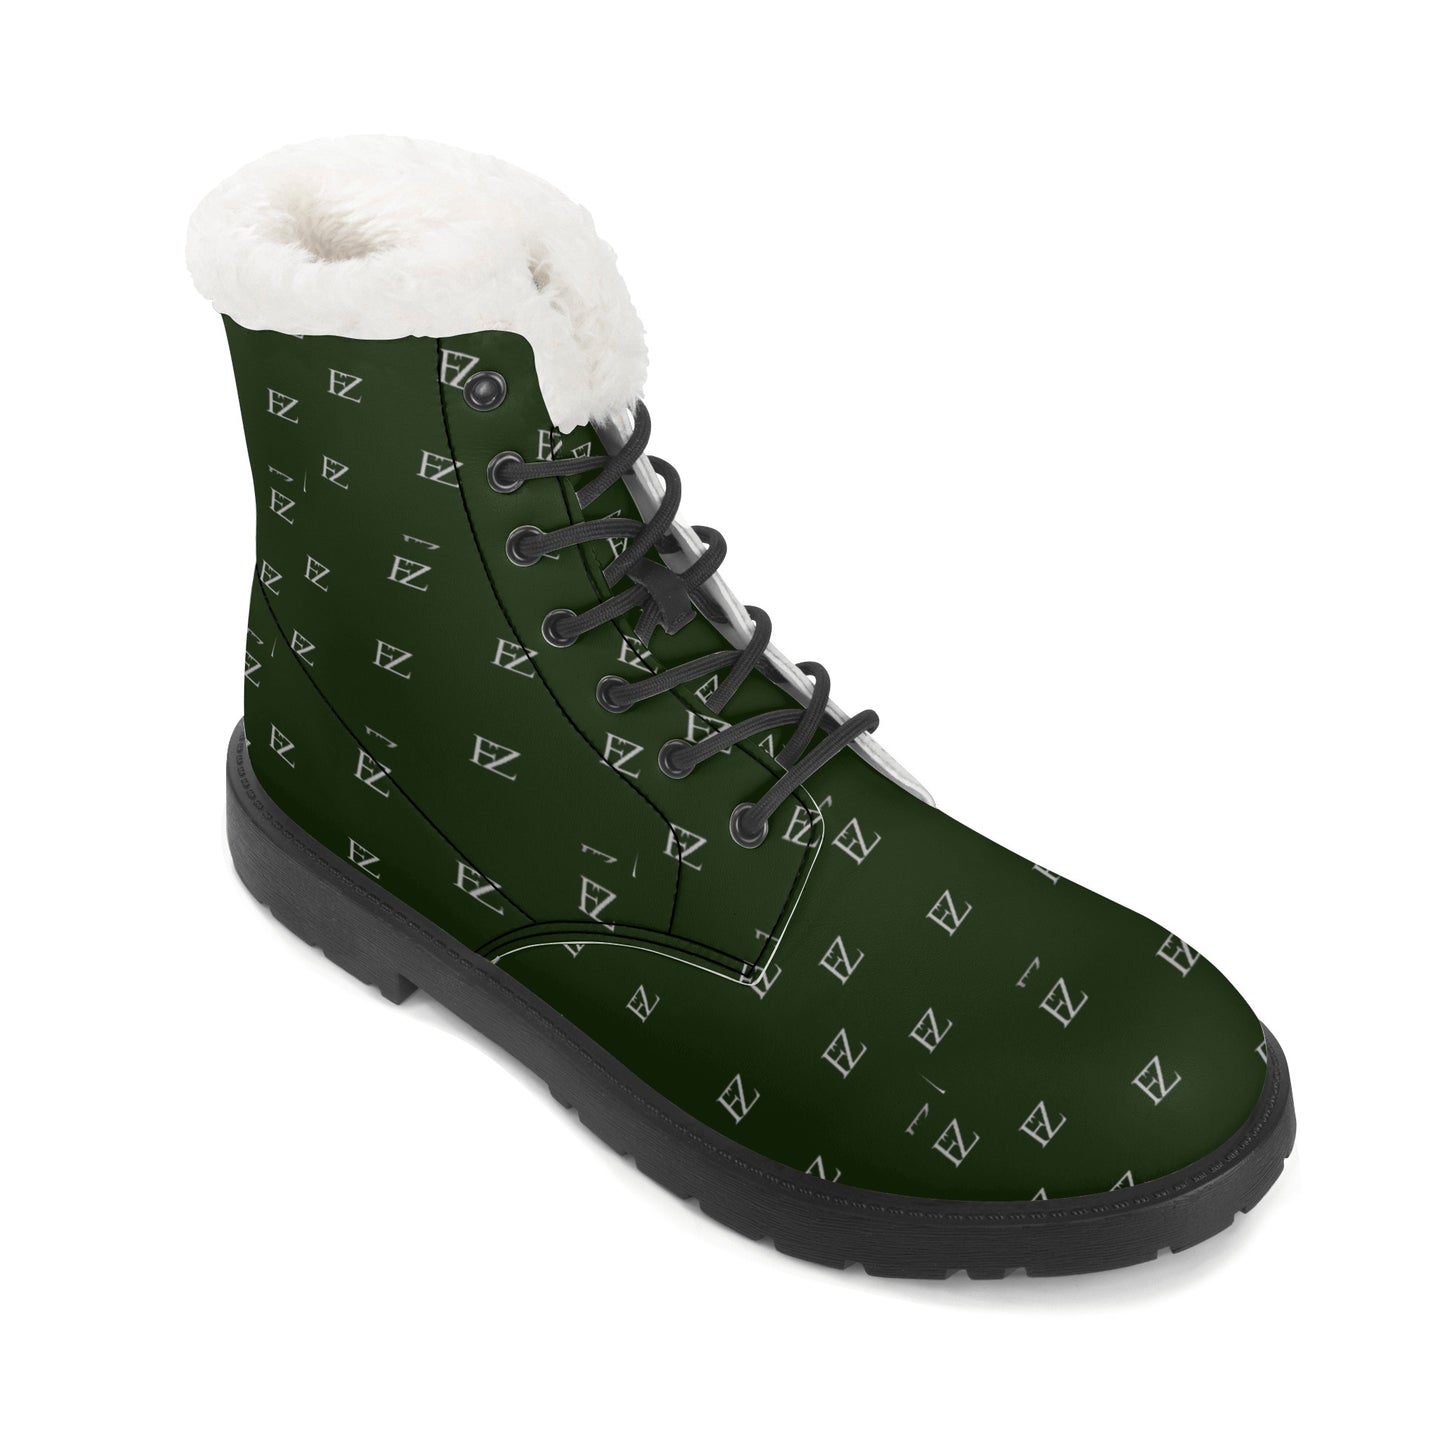 FZ Mens Faux Fur Leather Boots